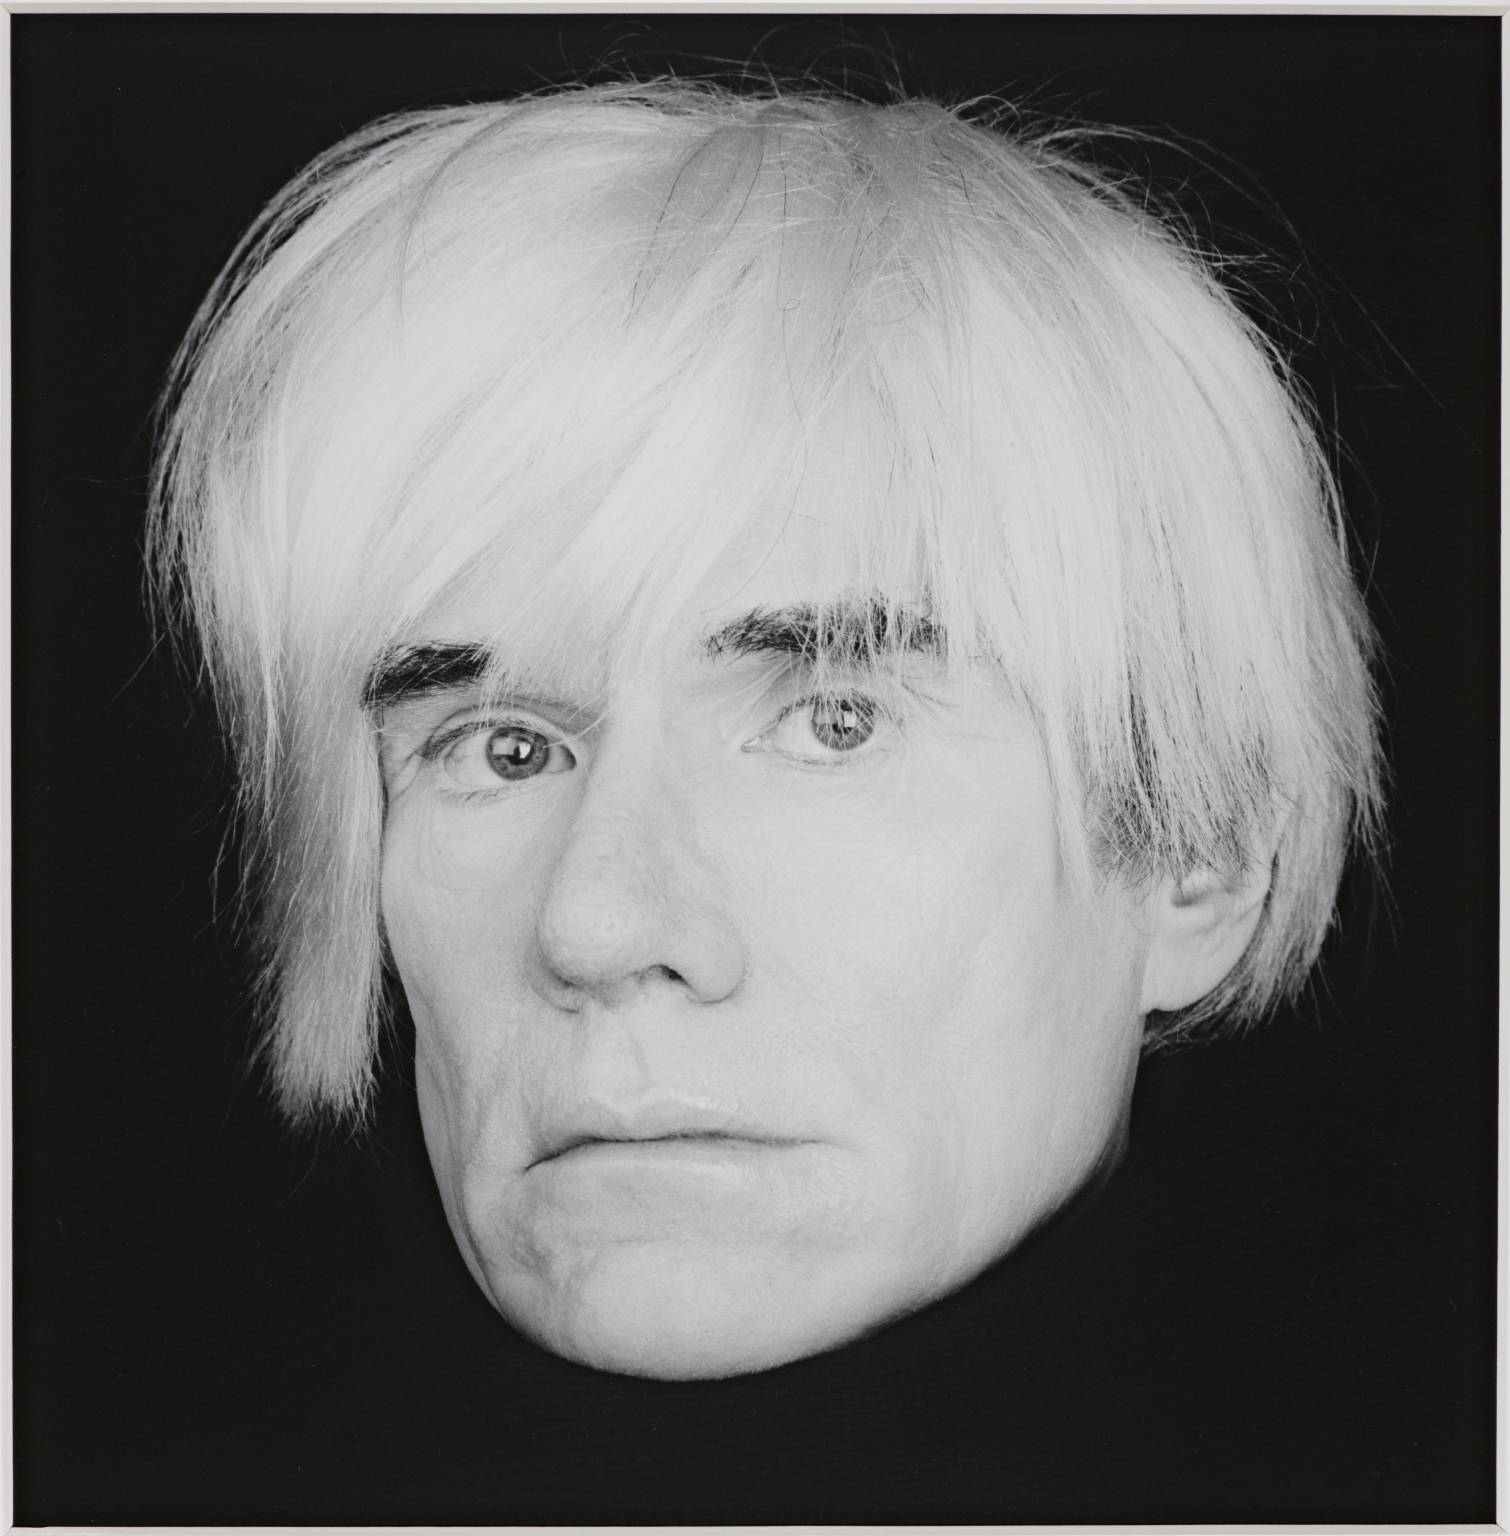 Andy Warhol, 1986, by Robert Mapplethorpe